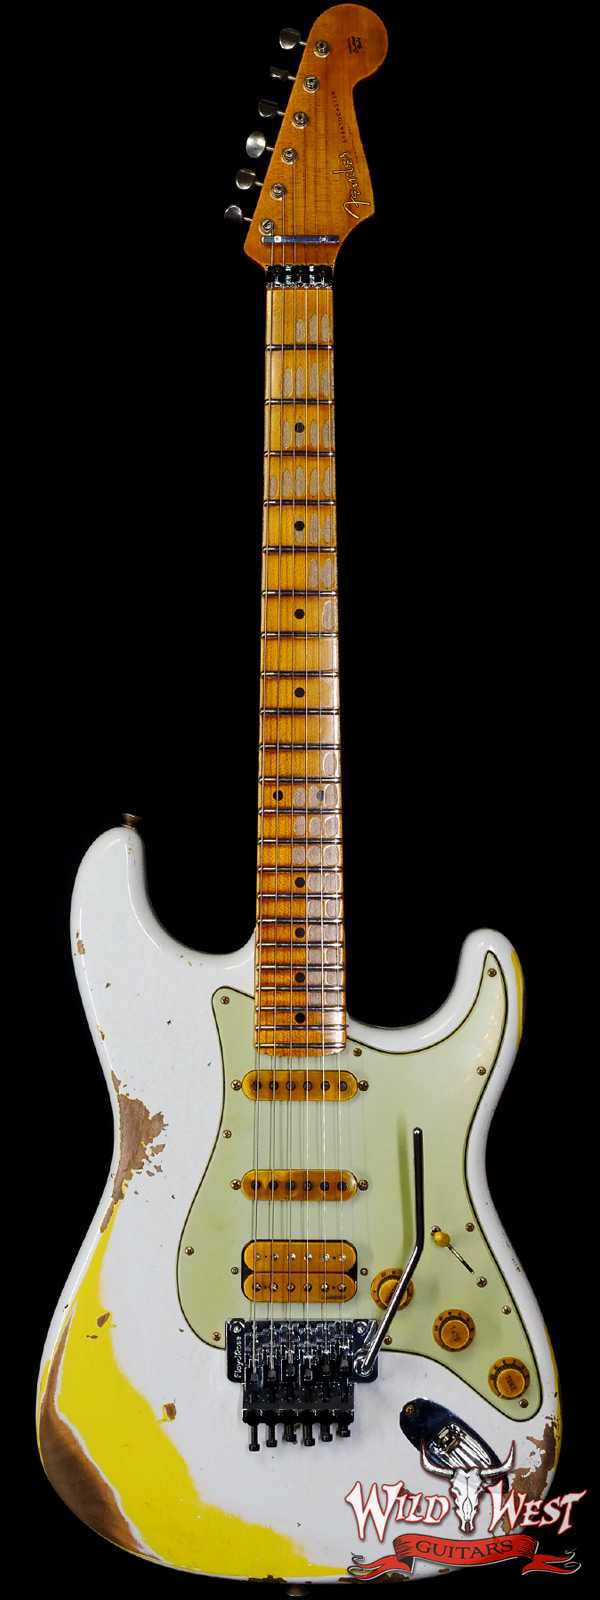 Fender Custom Shop Wild West White Lightning Stratocaster HSS Floyd Rose Maple Board 22 Frets Heavy Relic Graffiti Yellow